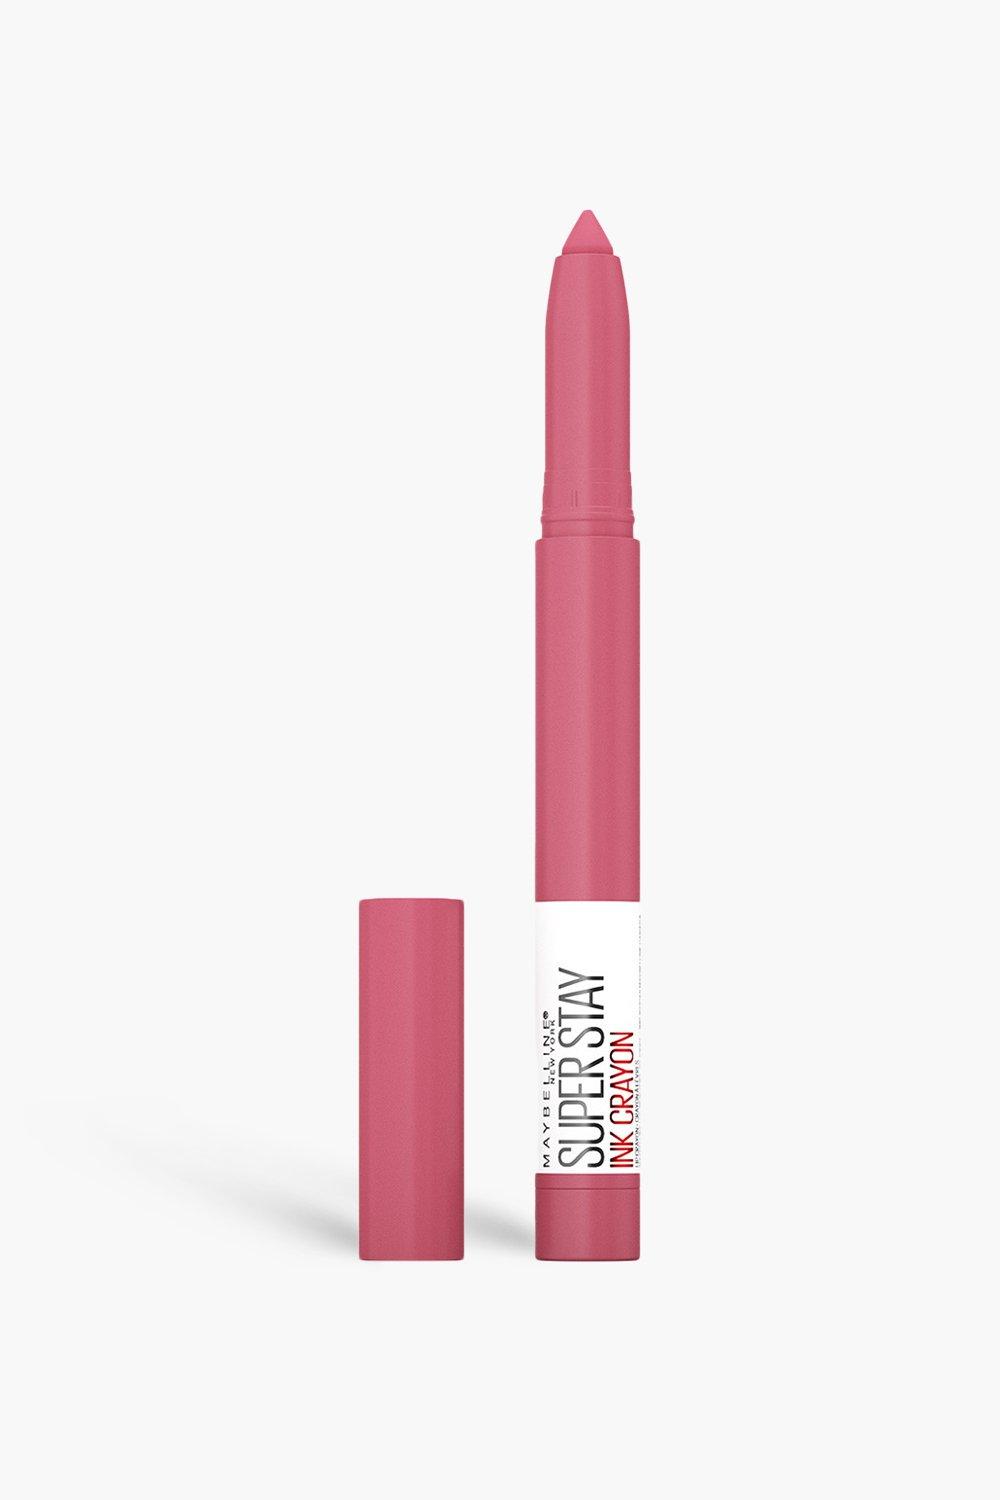 Maybelline Superstay Matte Crayon Lipstick, 90 Keep It Fun